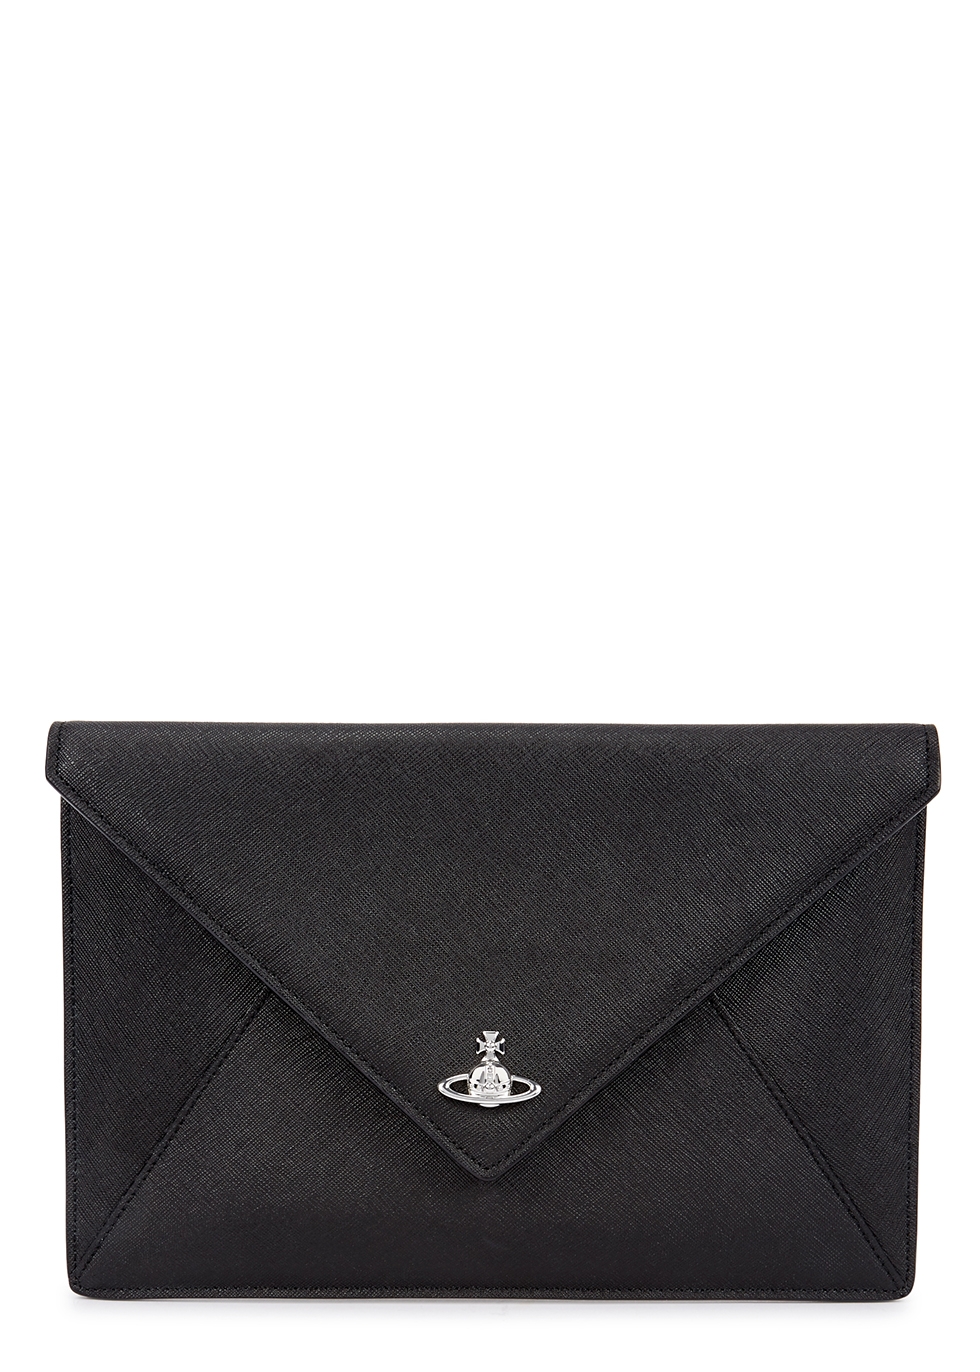 Vivienne Westwood Victoria black saffiano leather clutch - Harvey Nichols